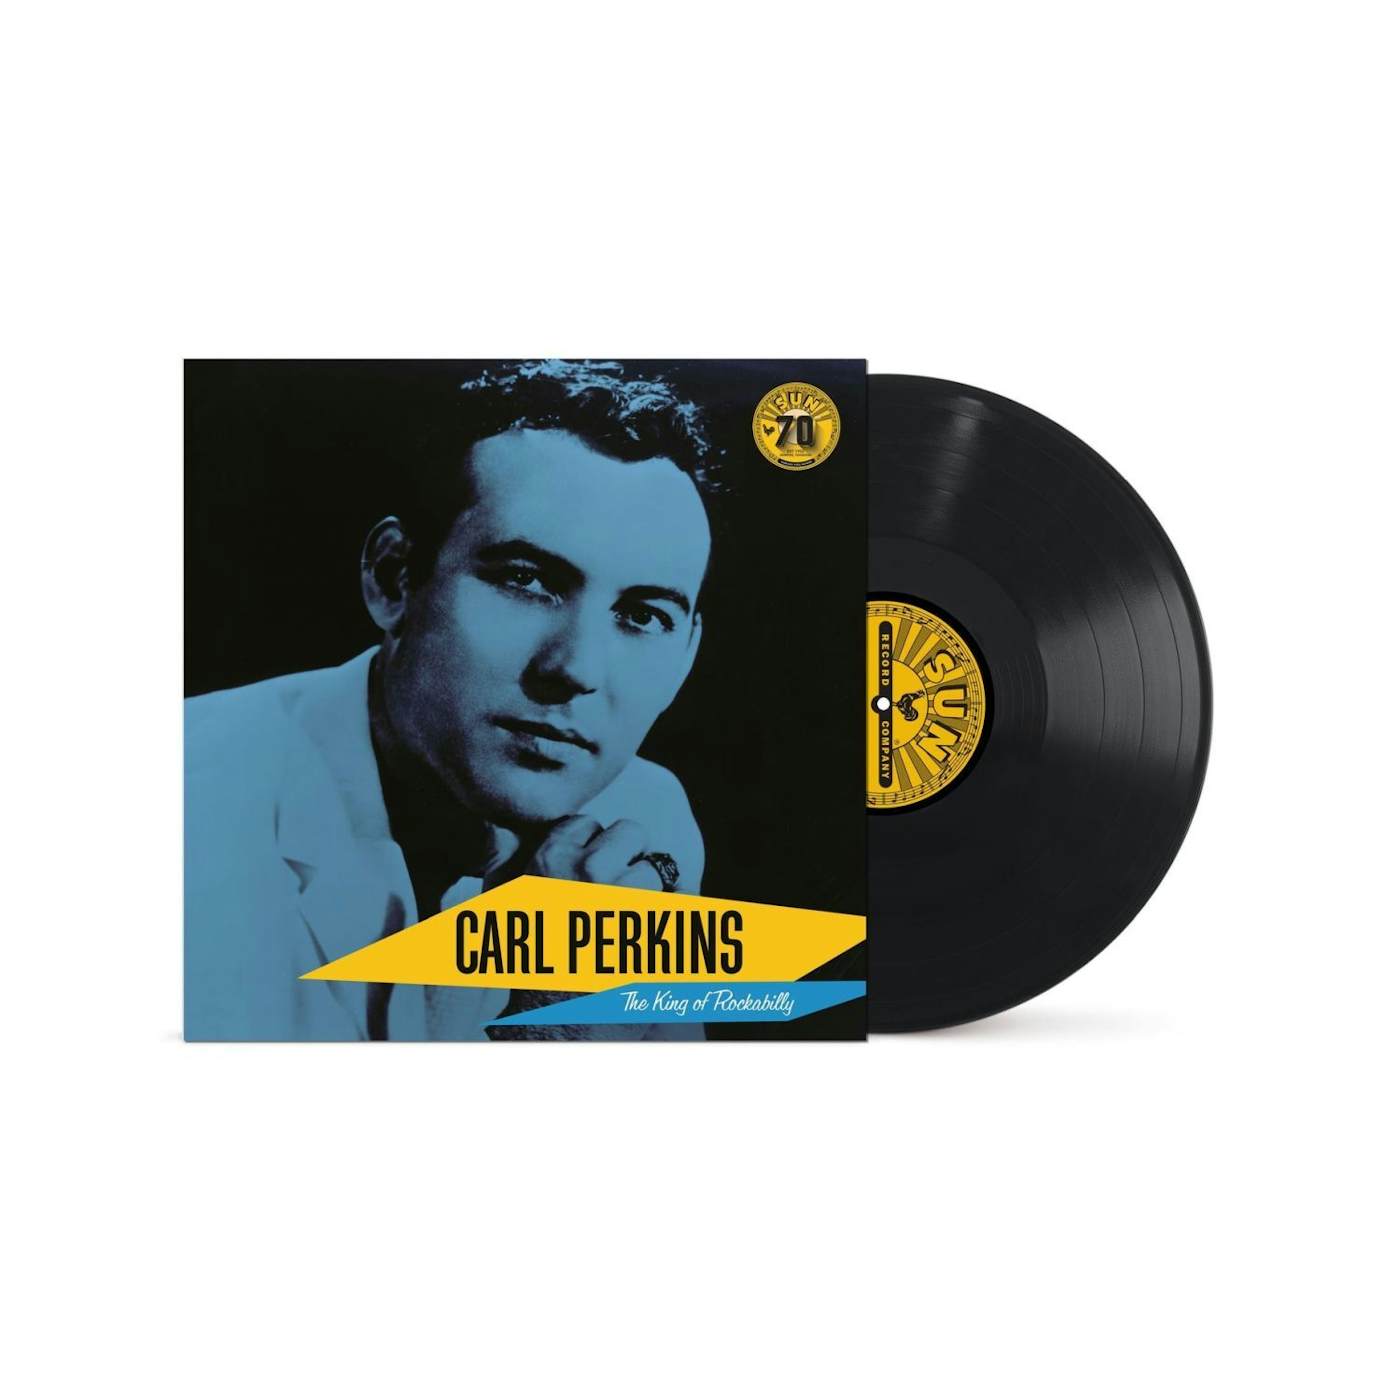 Carl Perkins: The King of Rockabilly LP Sun Records 70th / Remastered 2022 (Vinyl)